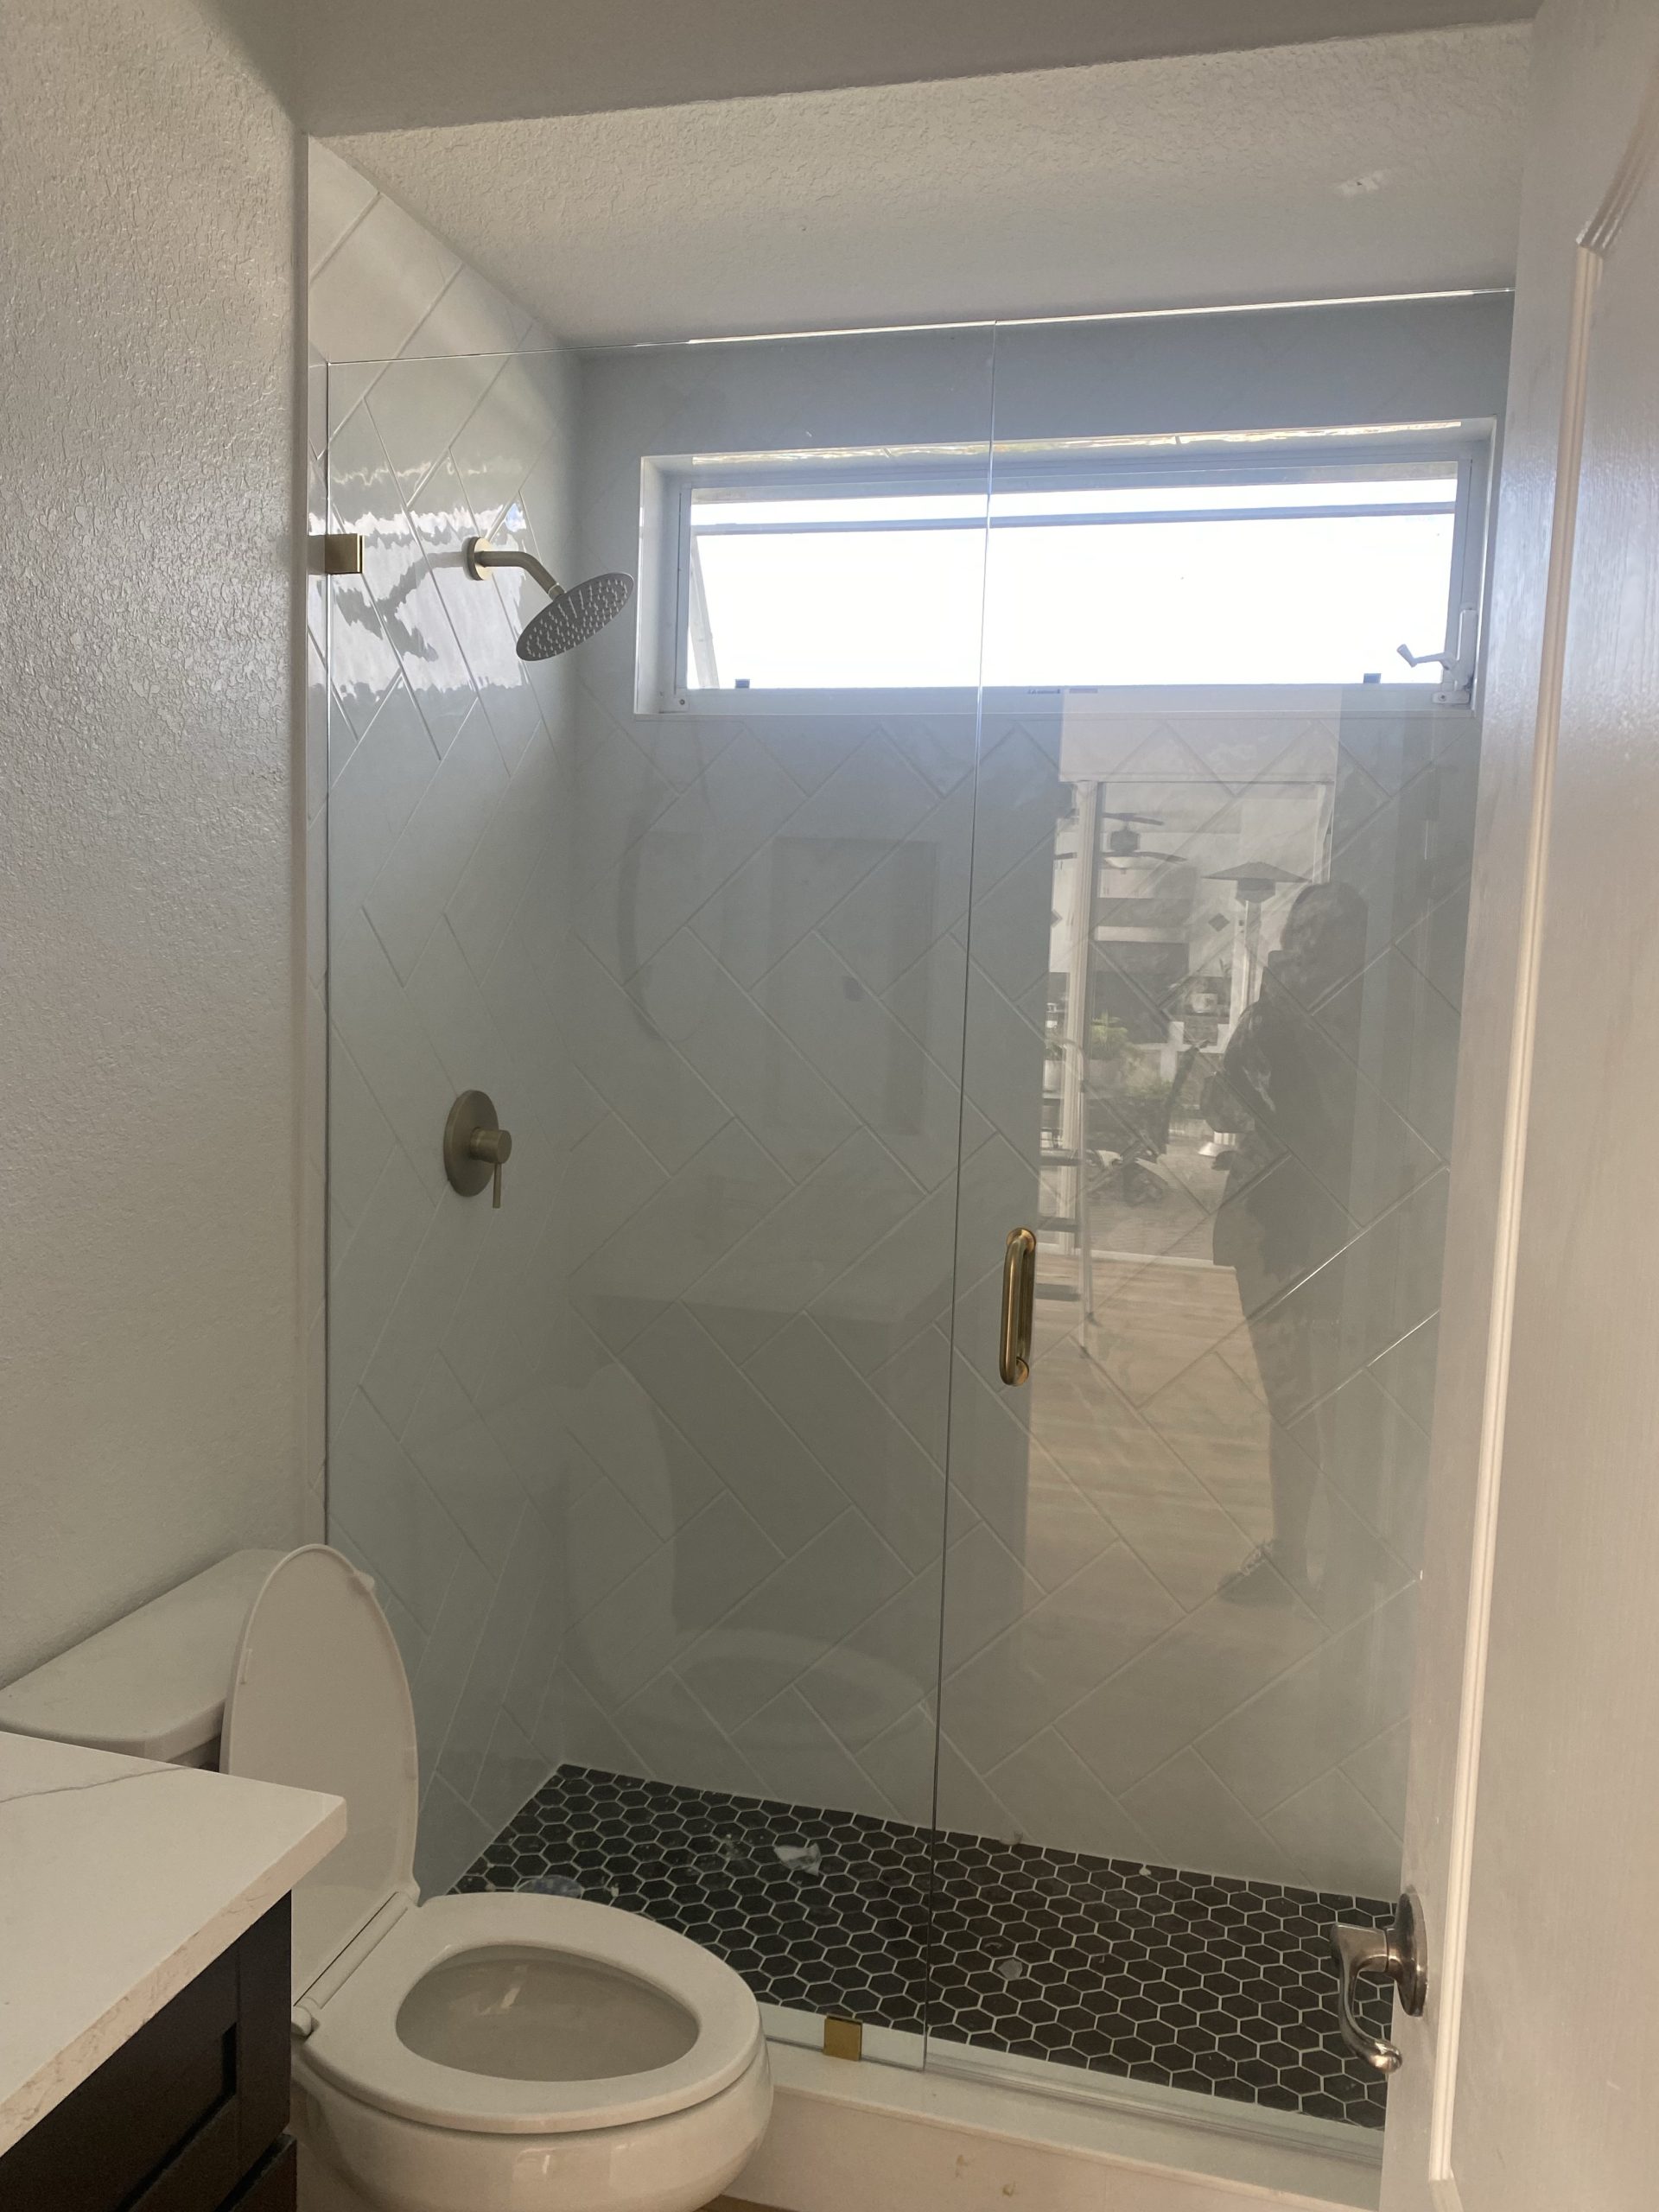 New Shower Enclosure Remodel